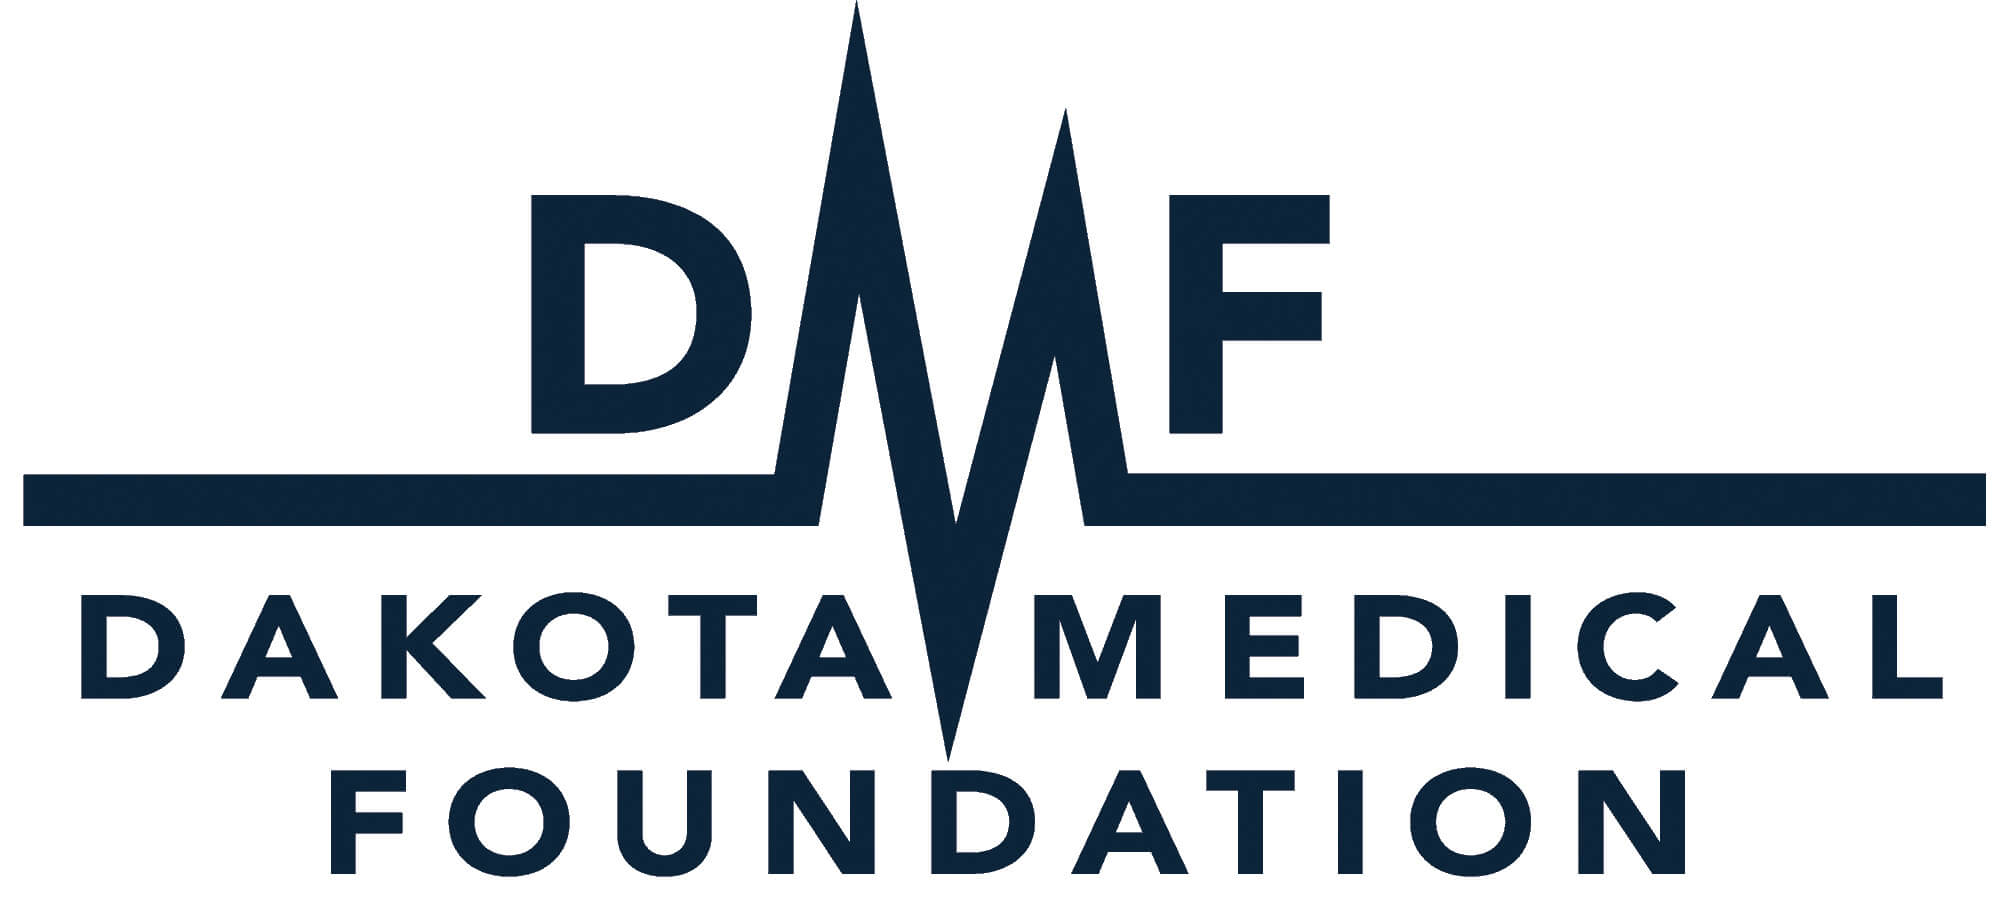 Dakota Medical Foundation